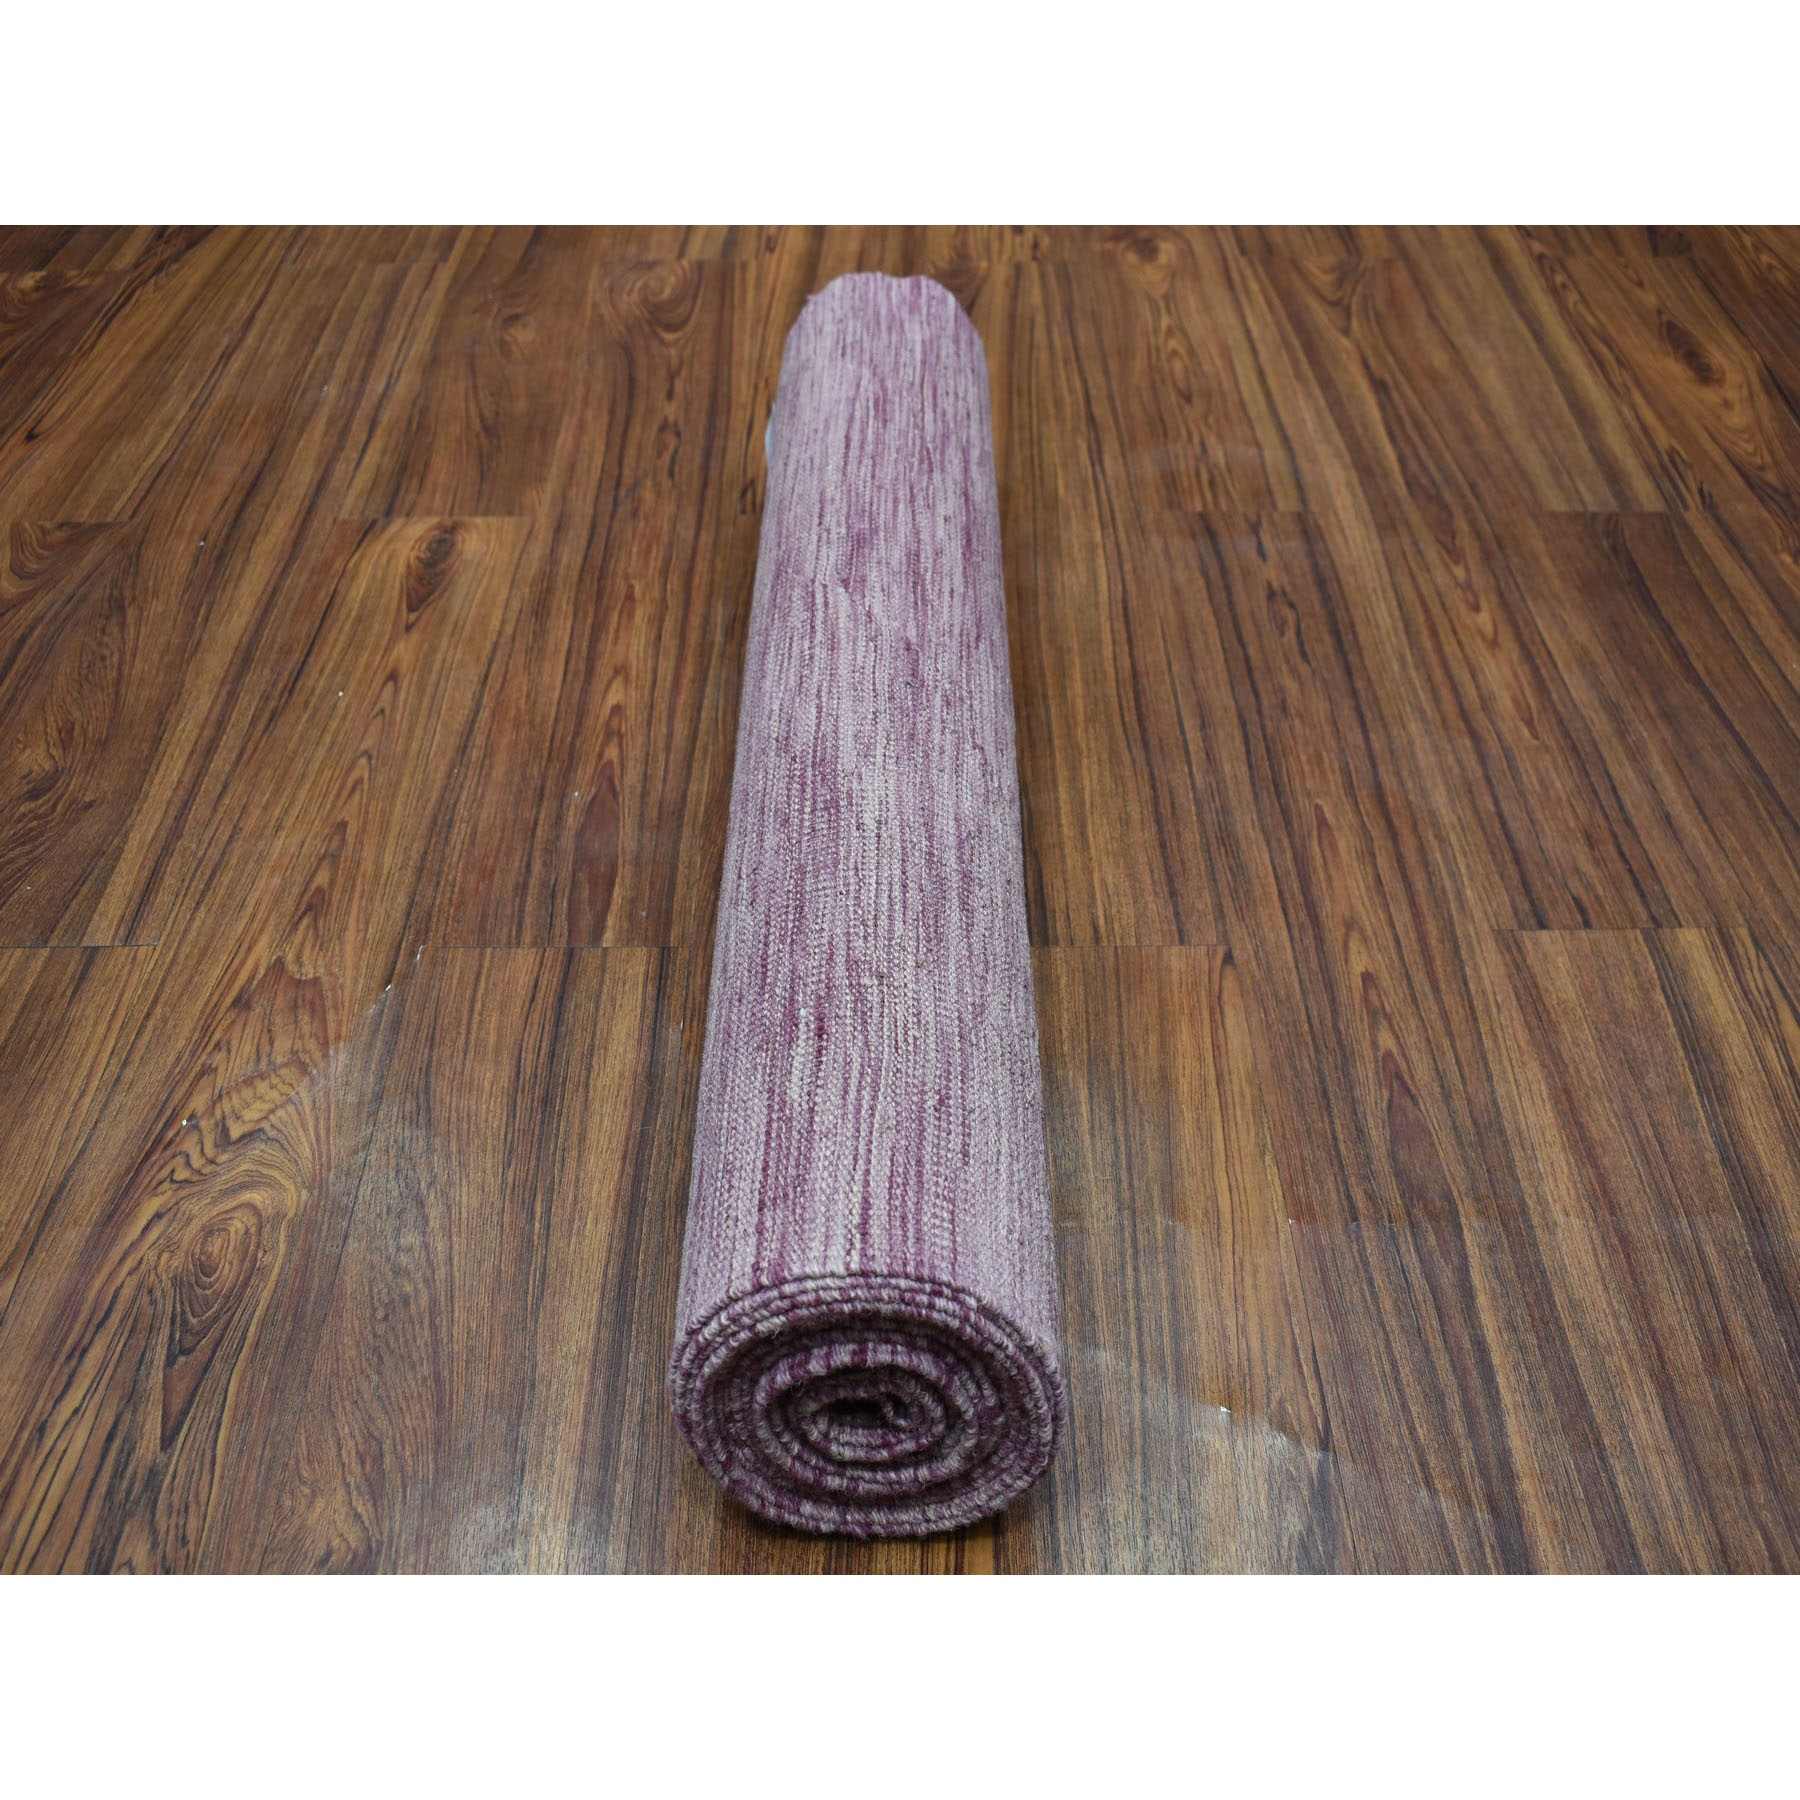 2-8 x16- Lavender Shades Reversible Kilim Pure Wool Hand Woven XL Runner Oriental Rug 